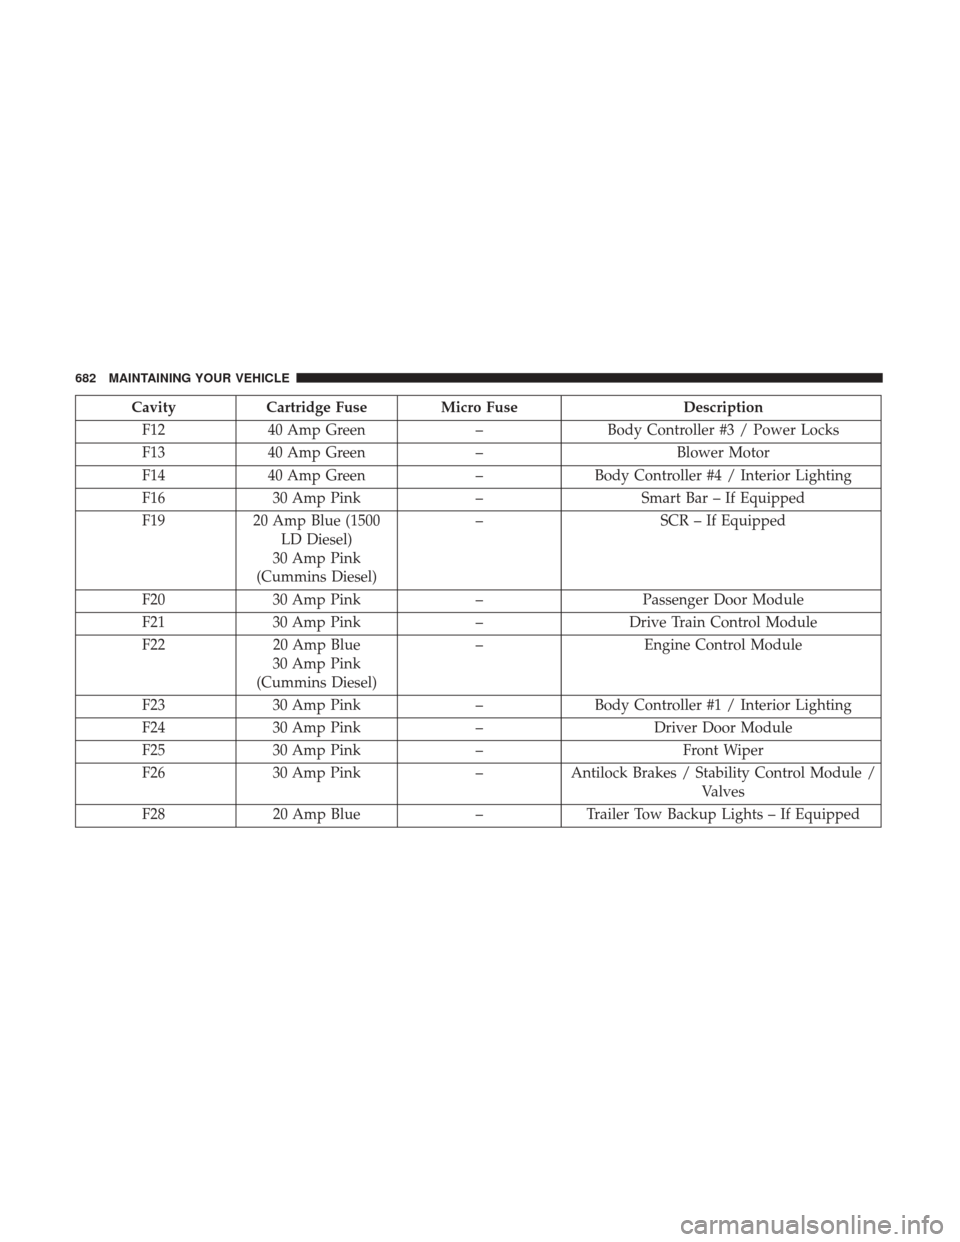 Ram 2500 2017  Owners Manual CavityCartridge Fuse Micro Fuse Description
F12 40 Amp Green –Body Controller #3 / Power Locks
F13 40 Amp Green –Blower Motor
F14 40 Amp Green –Body Controller #4 / Interior Lighting
F16 30 Amp 